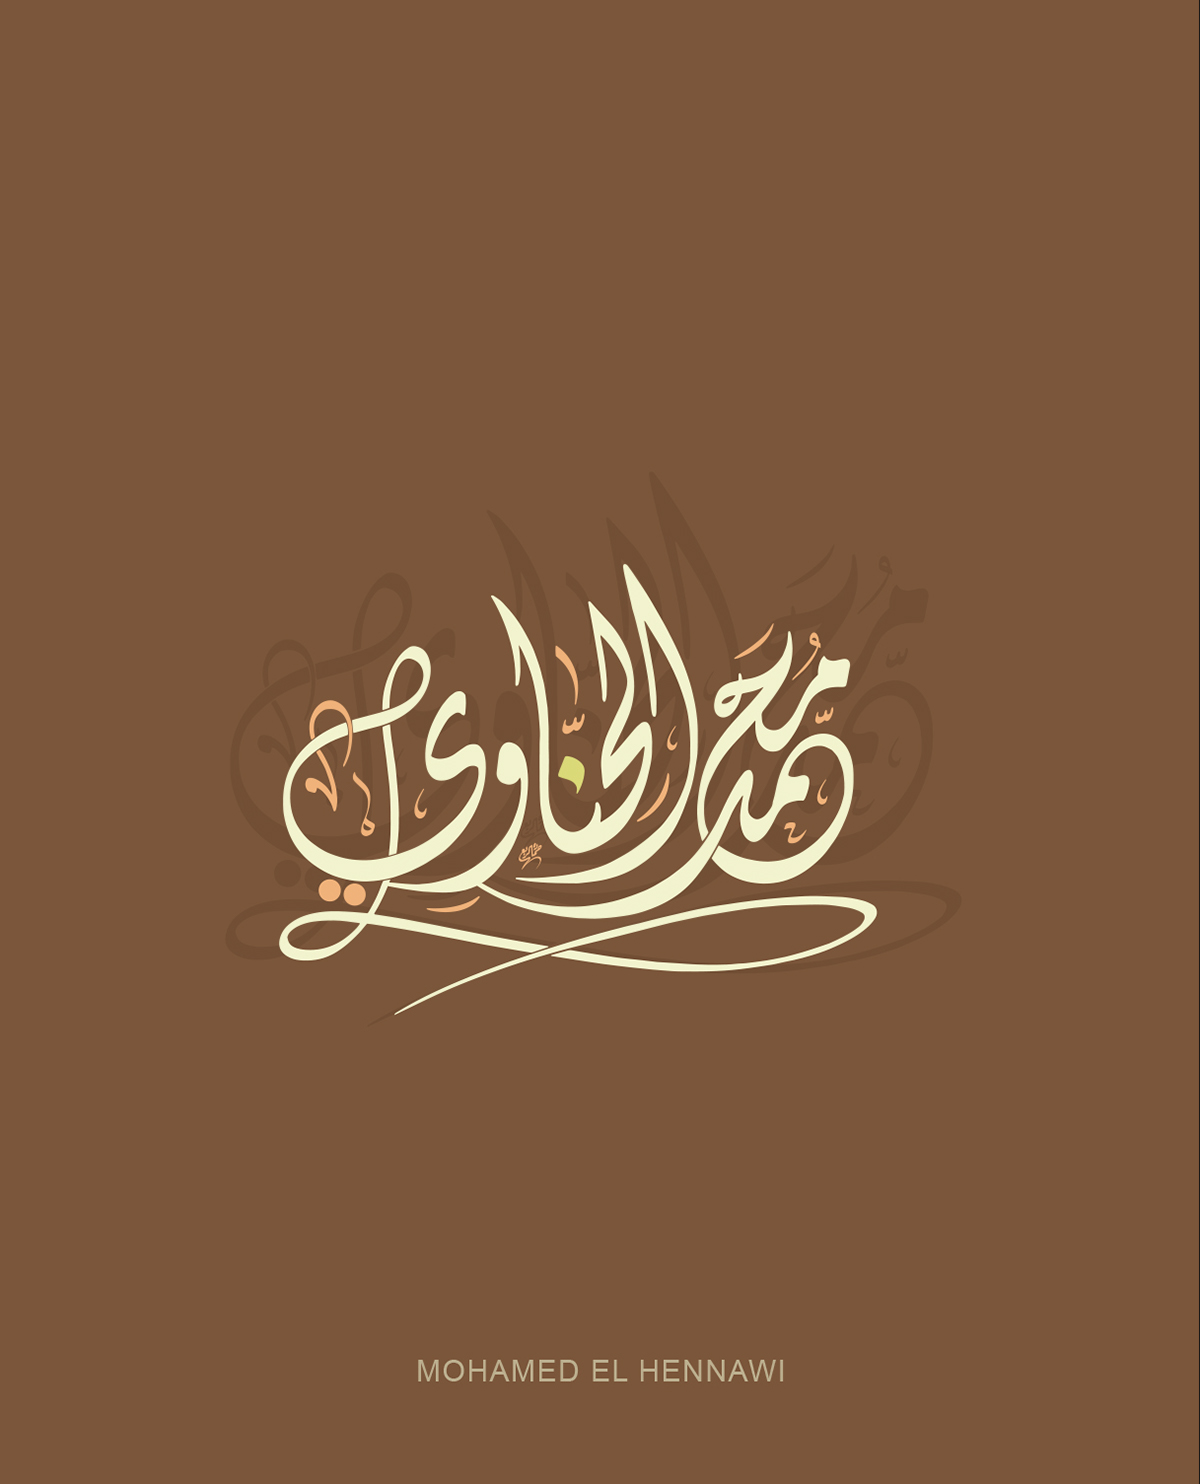 Logos Arabic names arabic branding modern calligraphy arabic Typography Calligraphy names islamic art arabic fonts arabic calligraphy Free style egypt